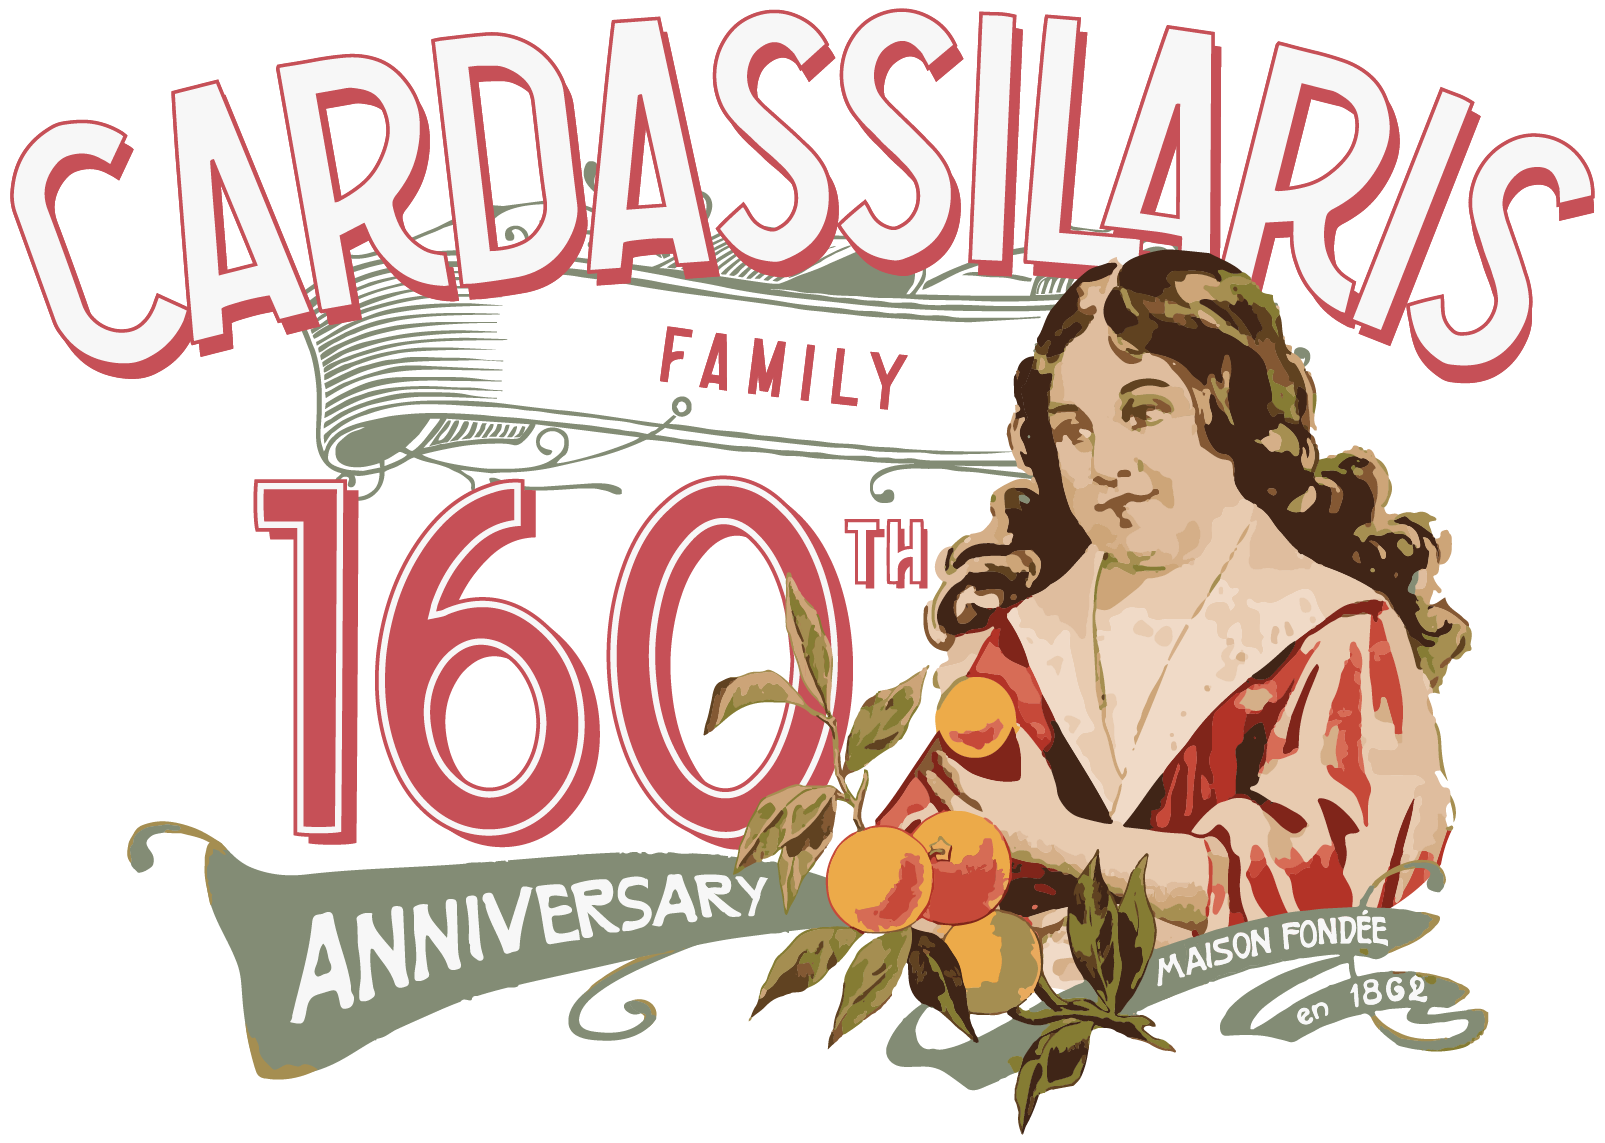 Cardassilaris Family